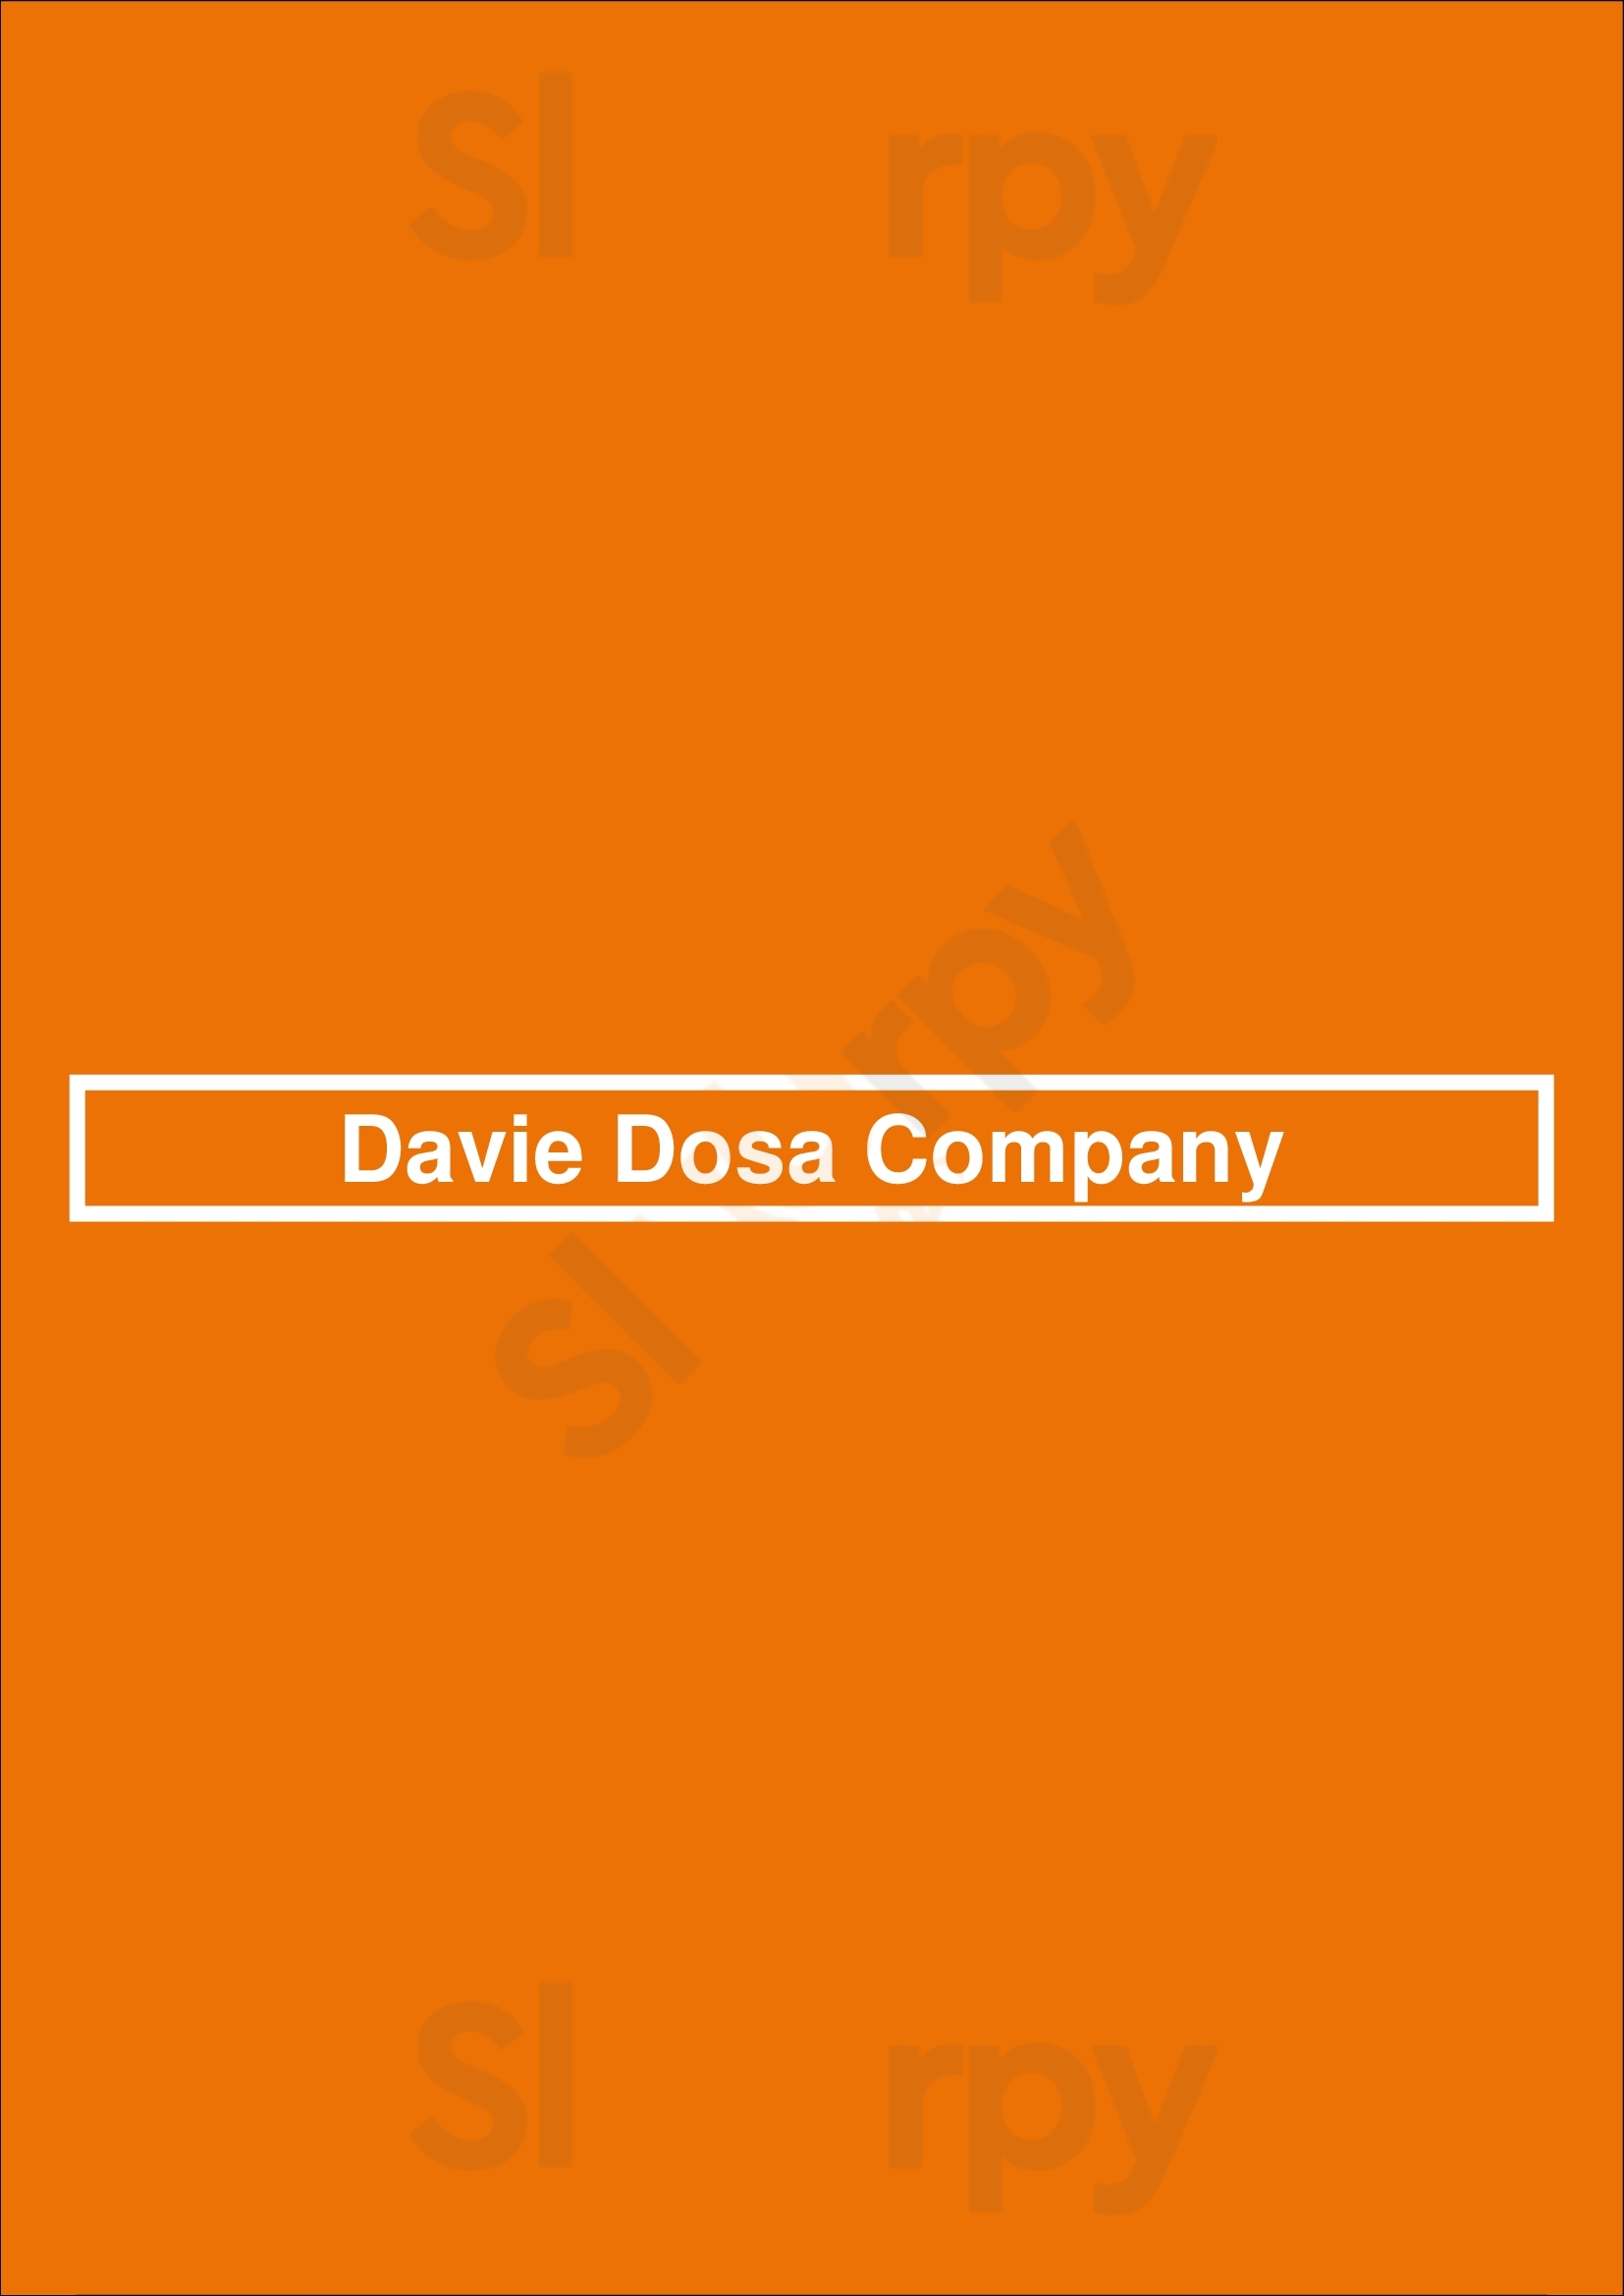 Davie Dosa Company Vancouver Menu - 1